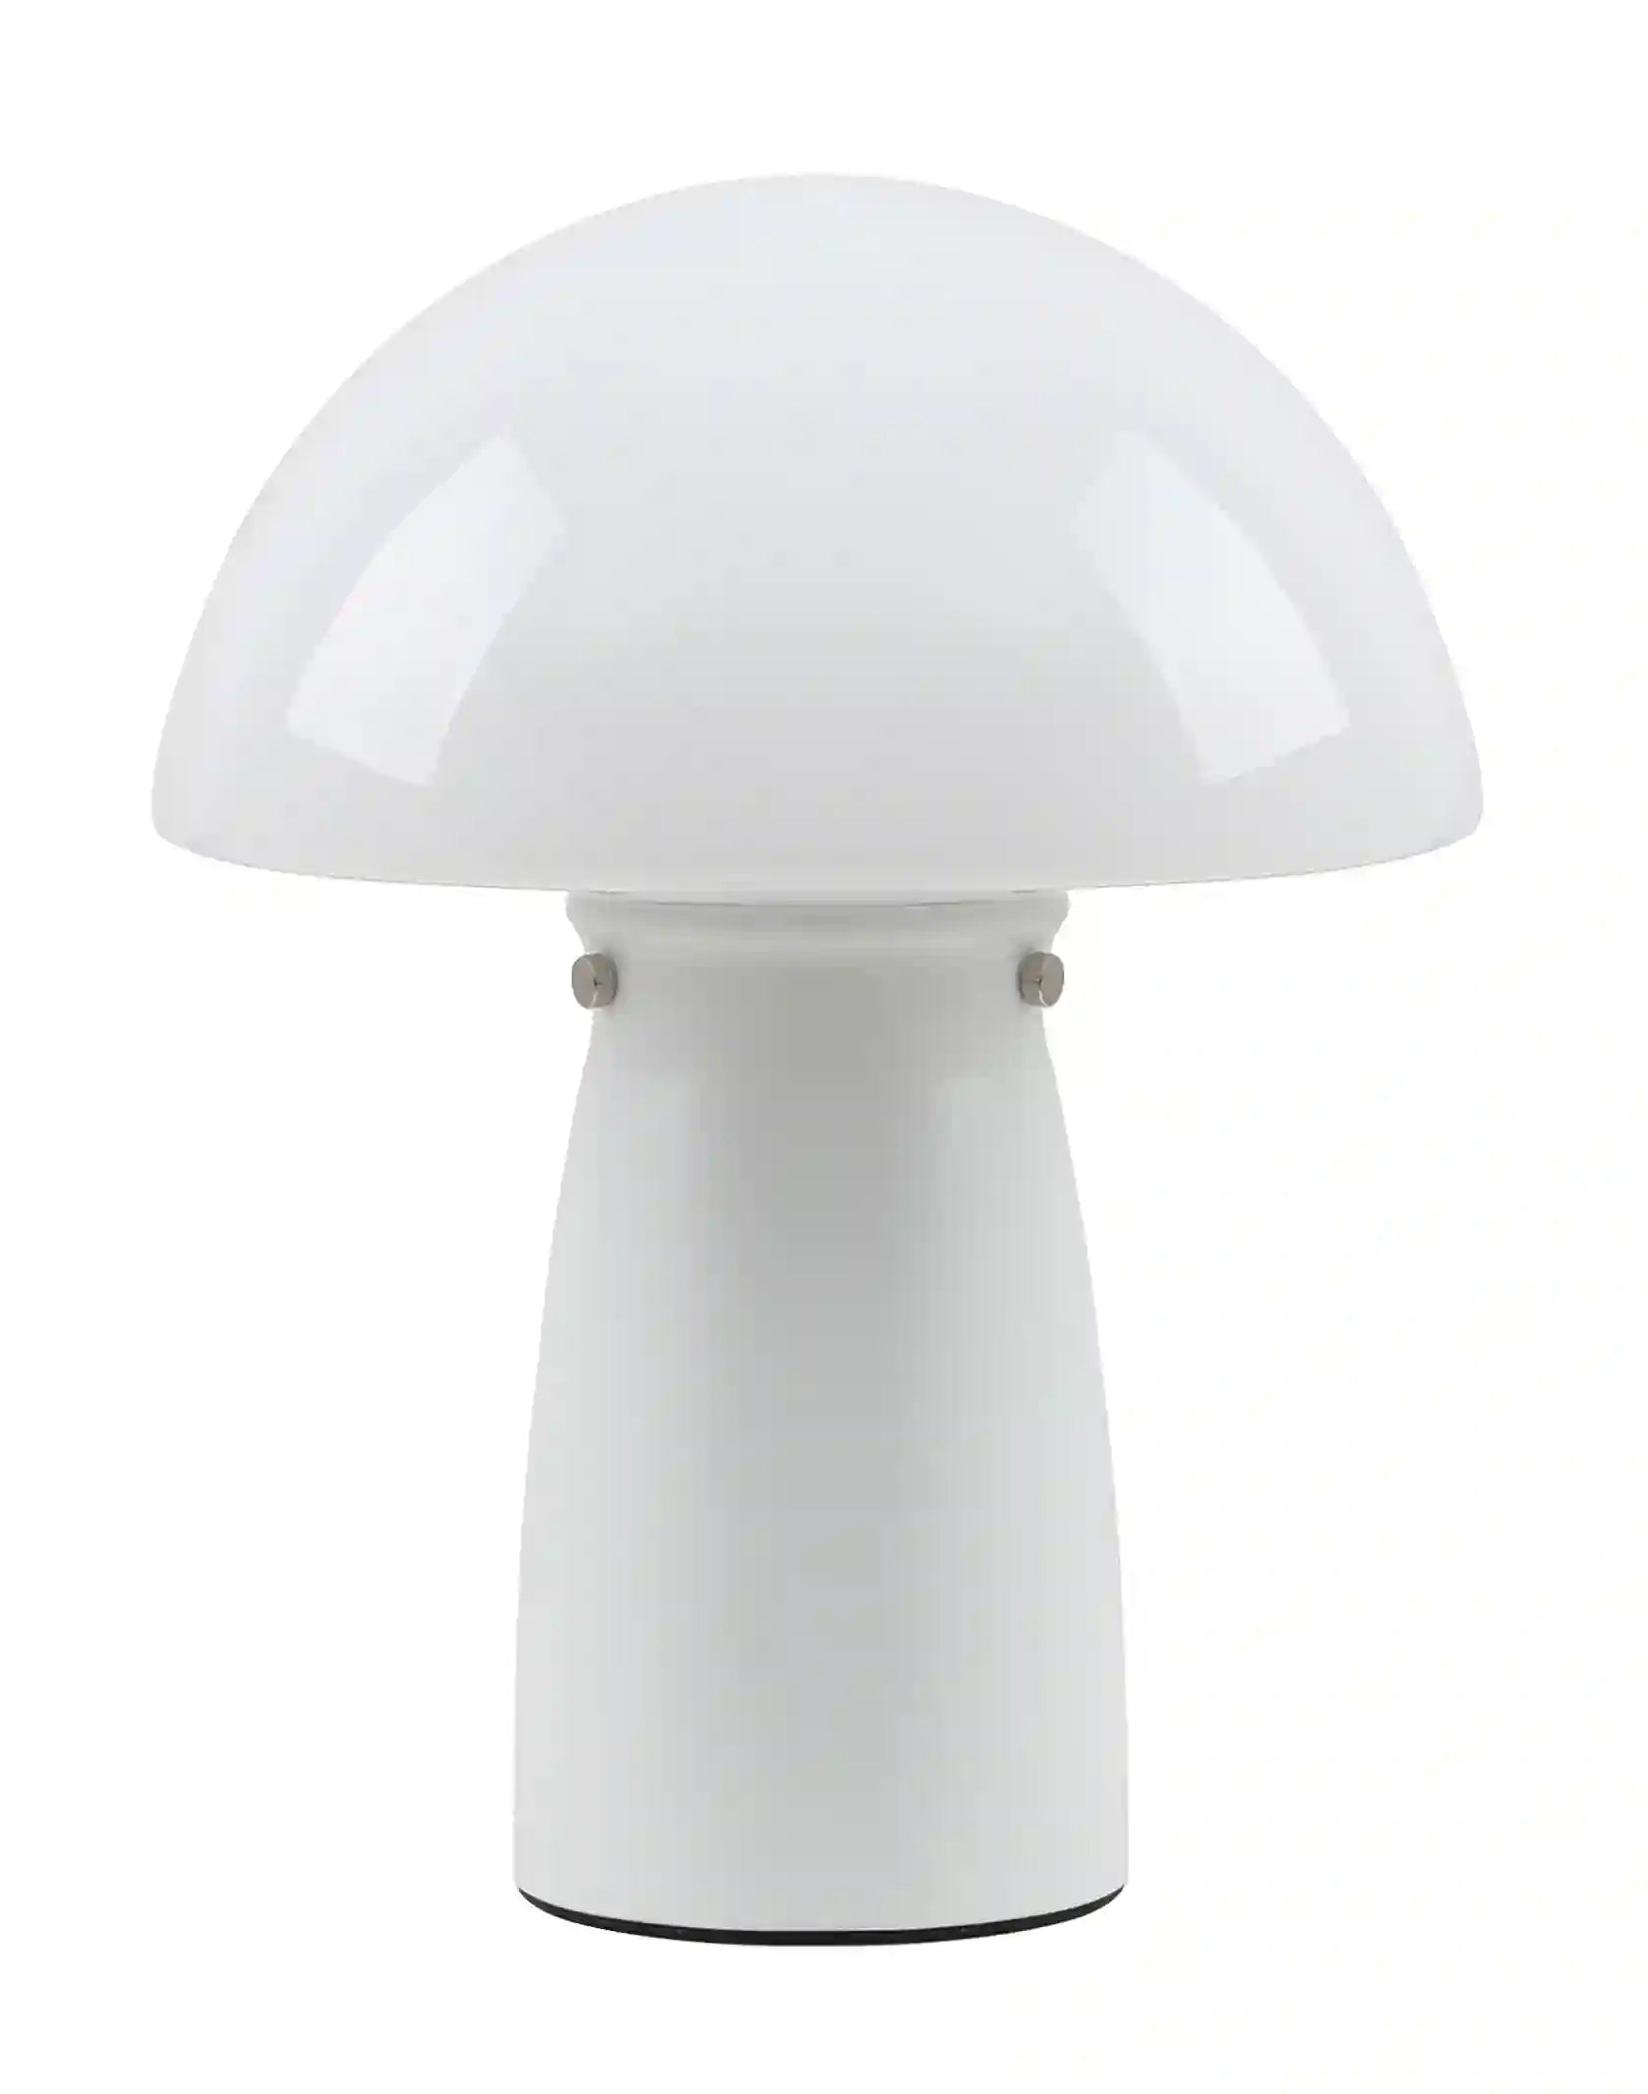 Selected image for Rea Light Clio HN2456-W/W Stona lampa, E27, 25W, Ø25cm, Bela